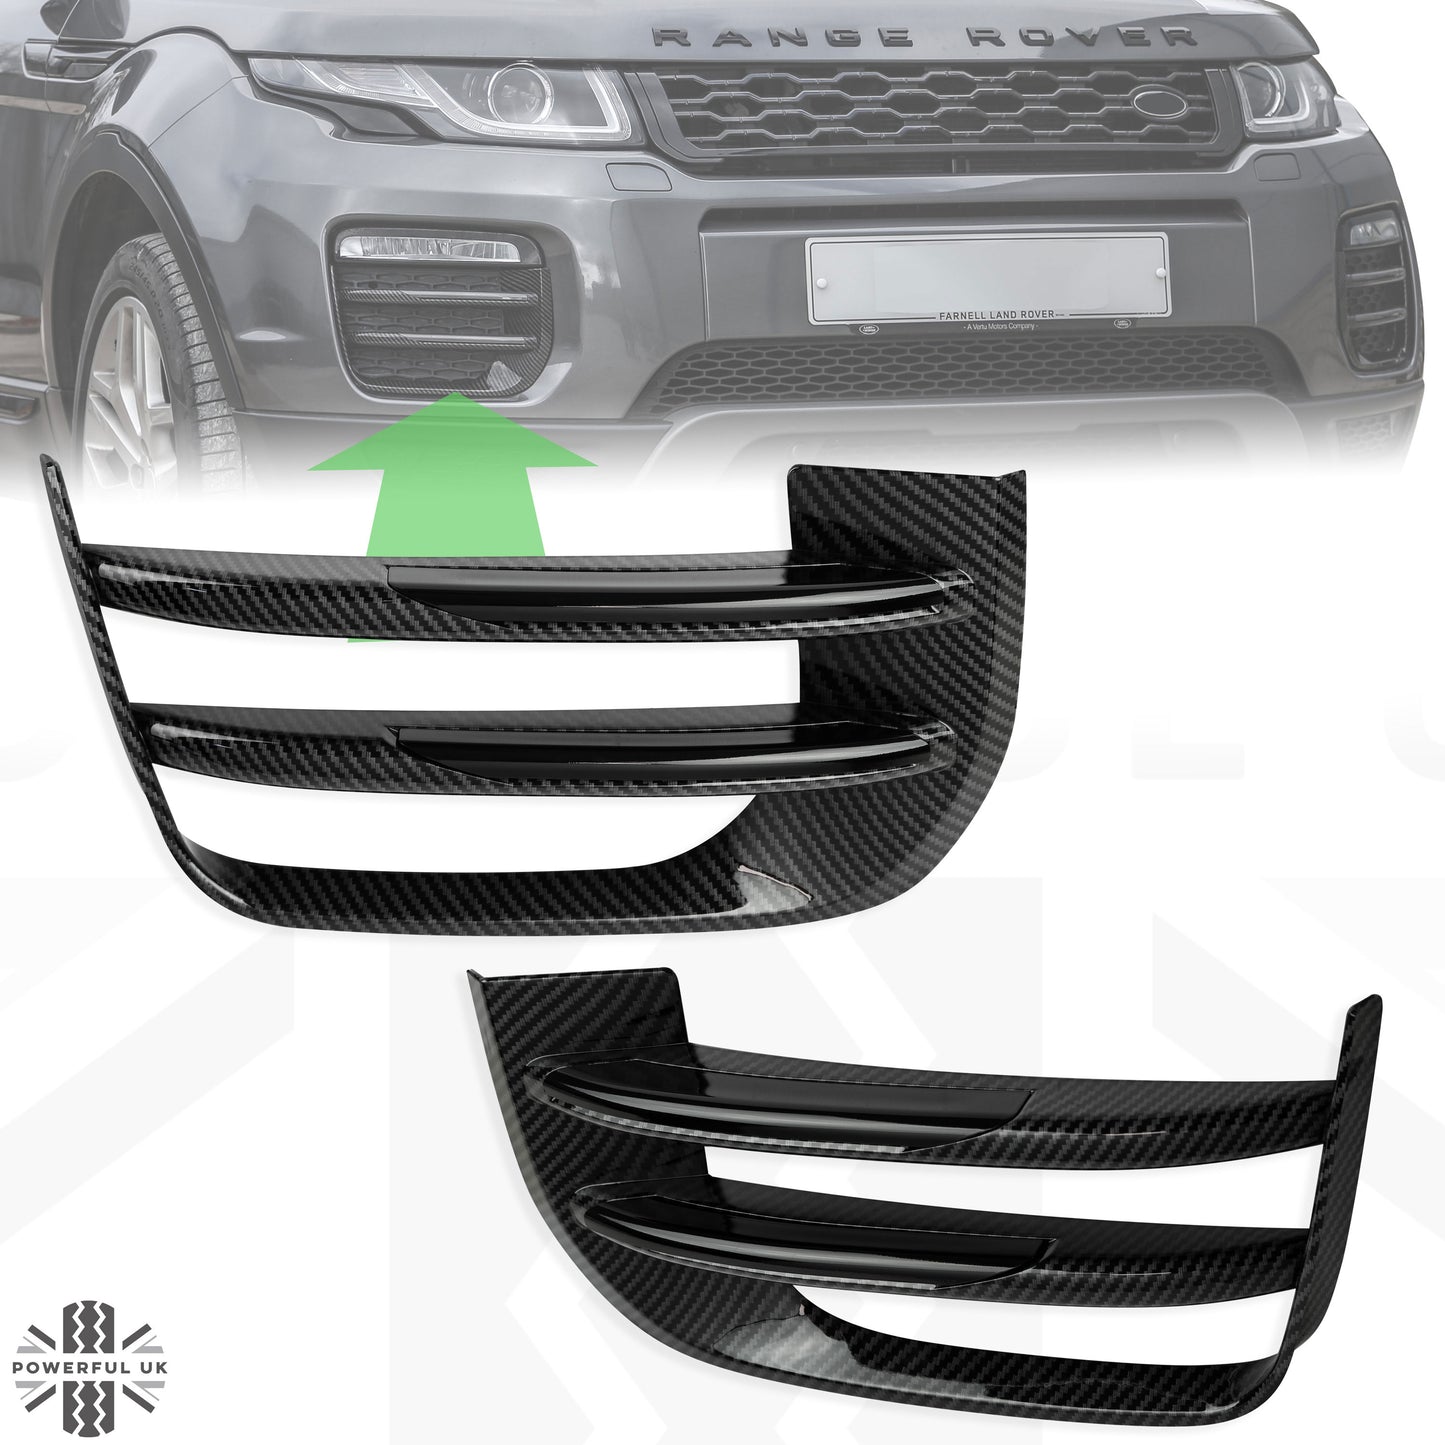 Carbon Fibre Effect Front fog Surrounds wih Black Inserts for Range Rover Evoque SE & HSE (2016-19)